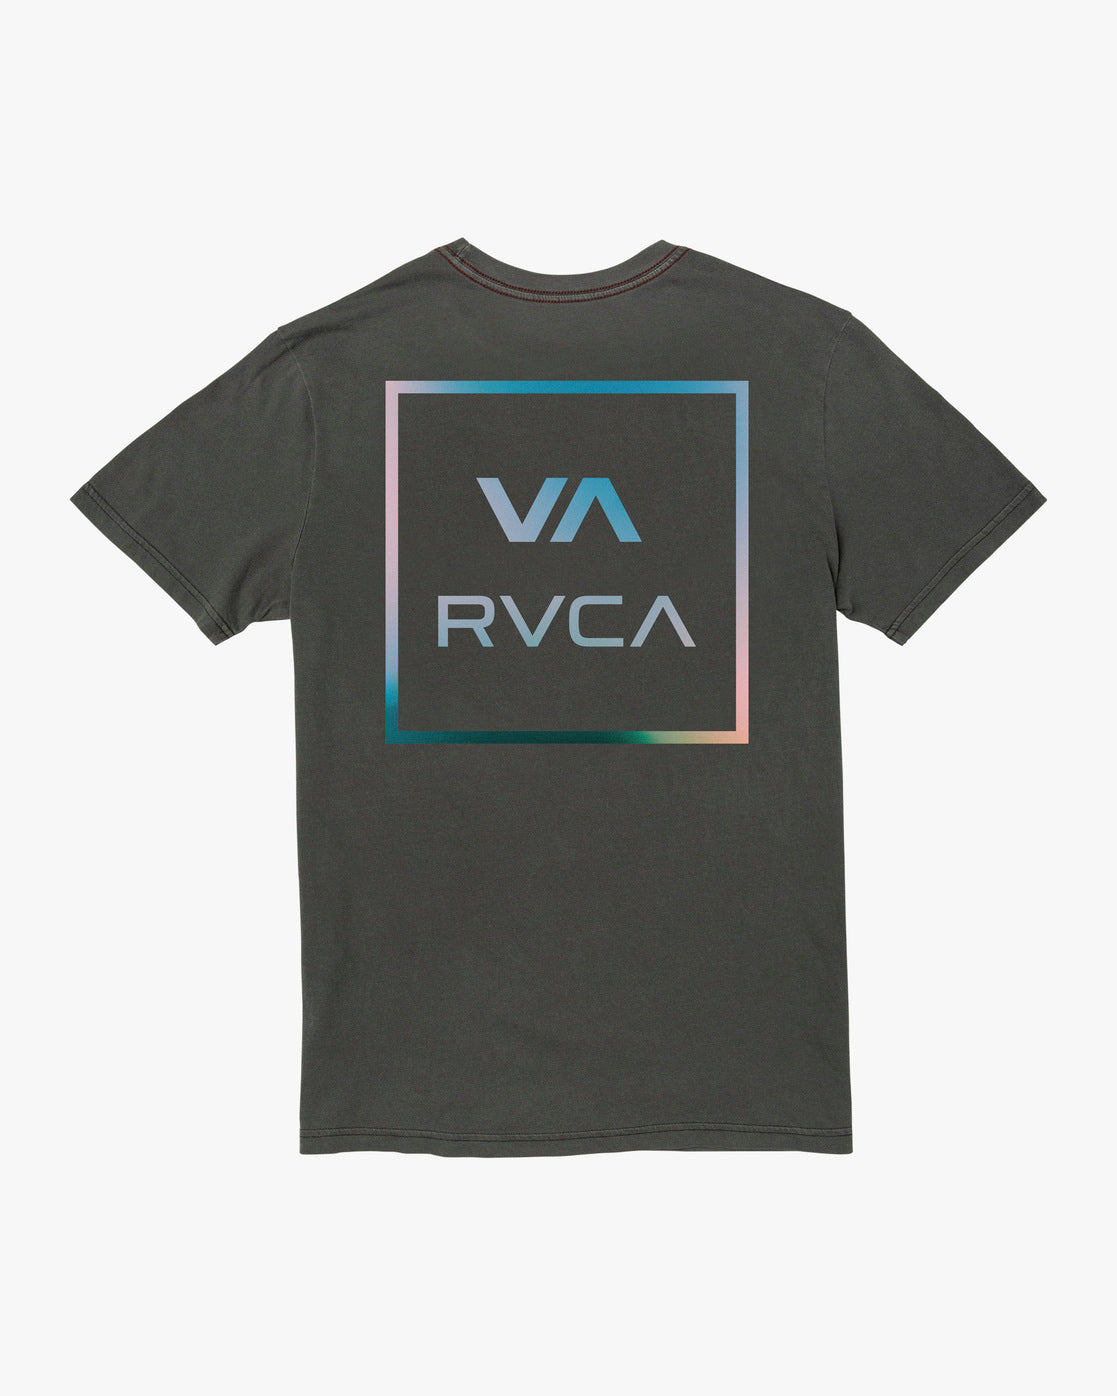 RVCA VA All The Way T-Shirt Pirate Black - Freeride Boardshop